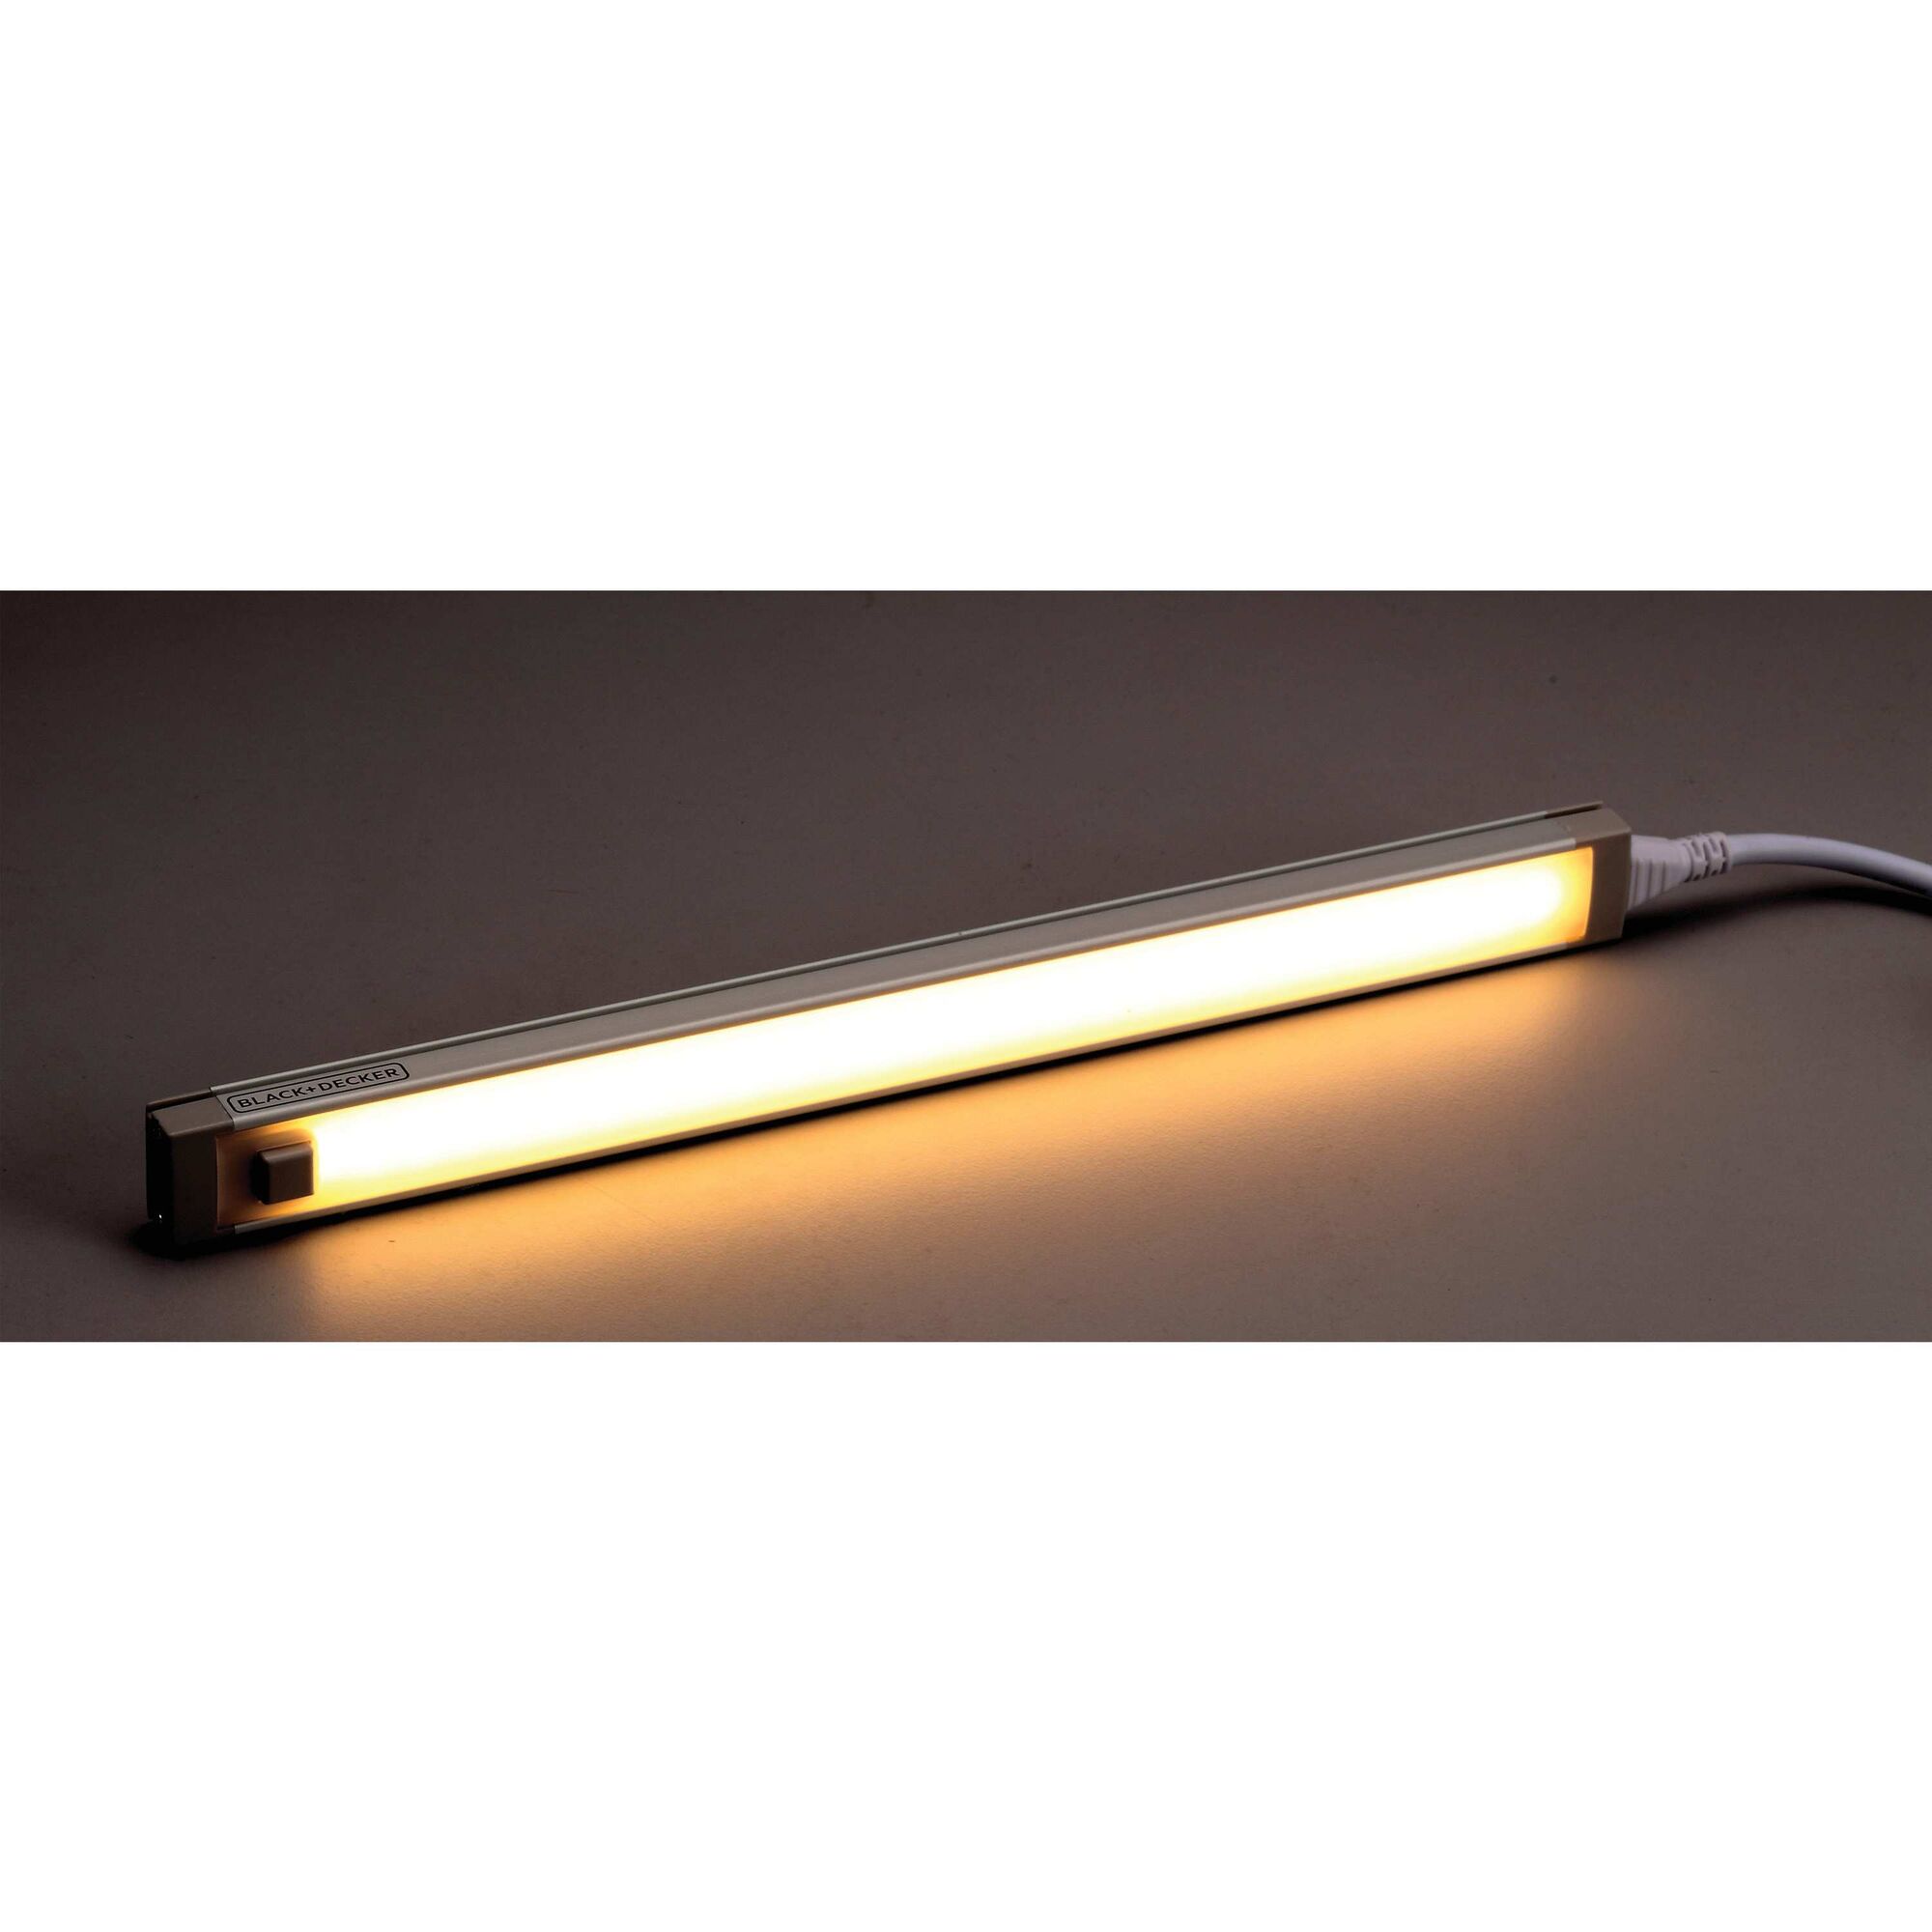 Maximum illumination with minimum footprint feature of 3 bar LED under cabinet lighting kit warm  9 inch.